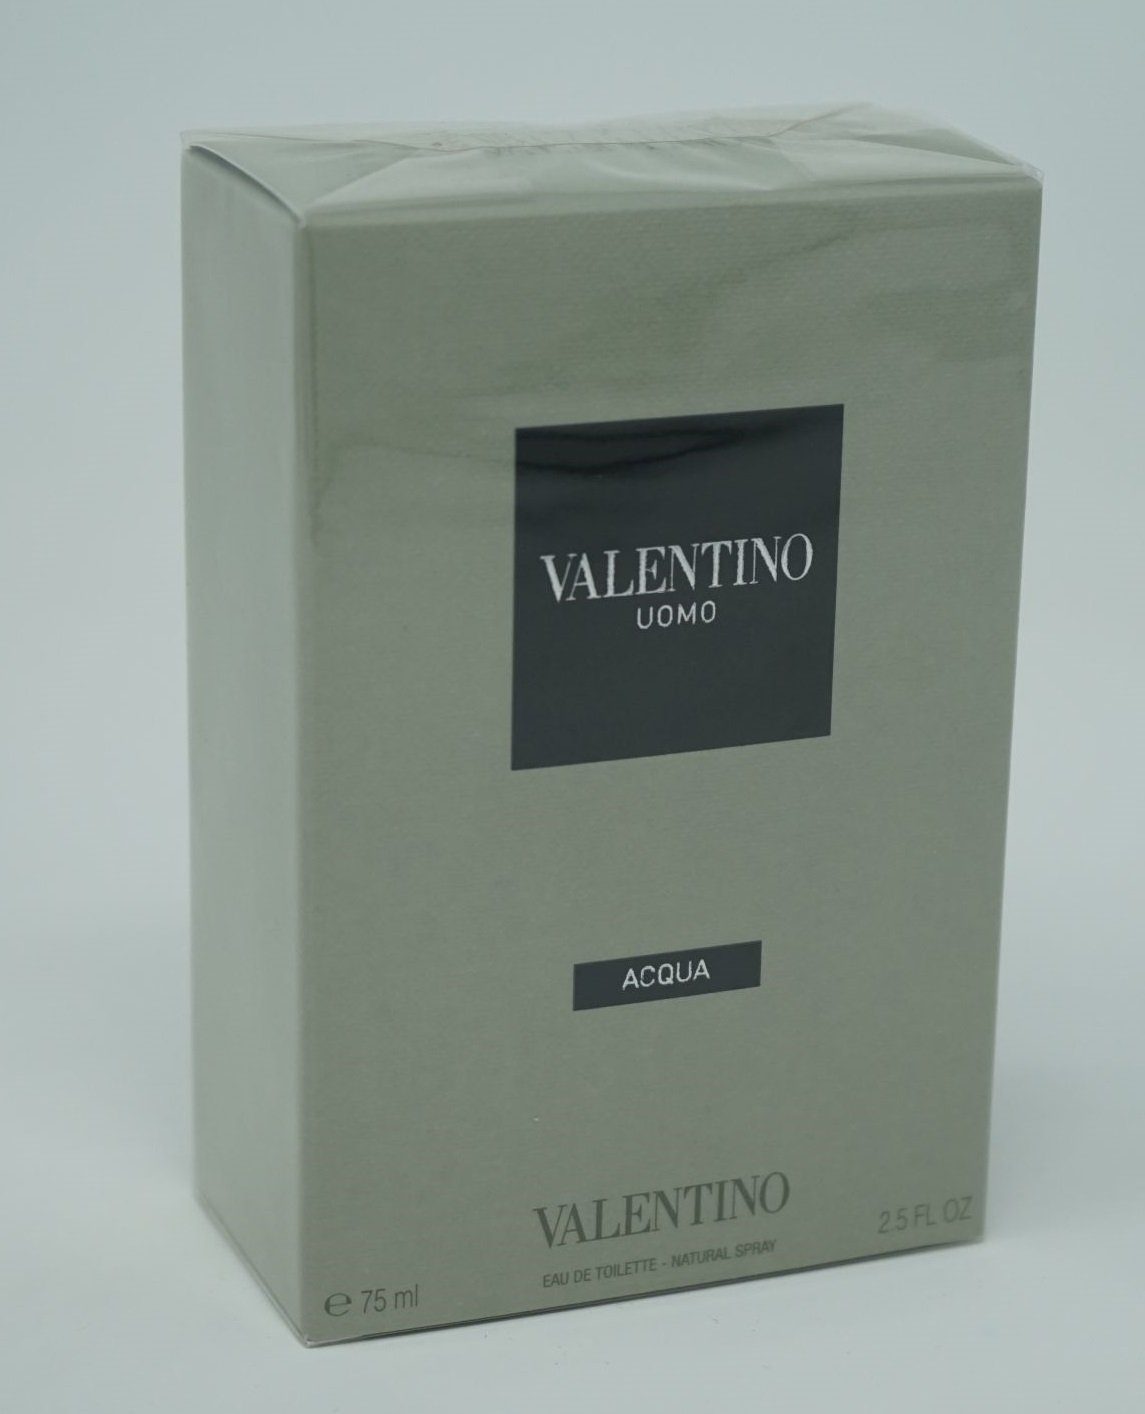 Valentino Eau Toilette Toilette de Eau de Spray Acqua Valentino Uomo 75ml